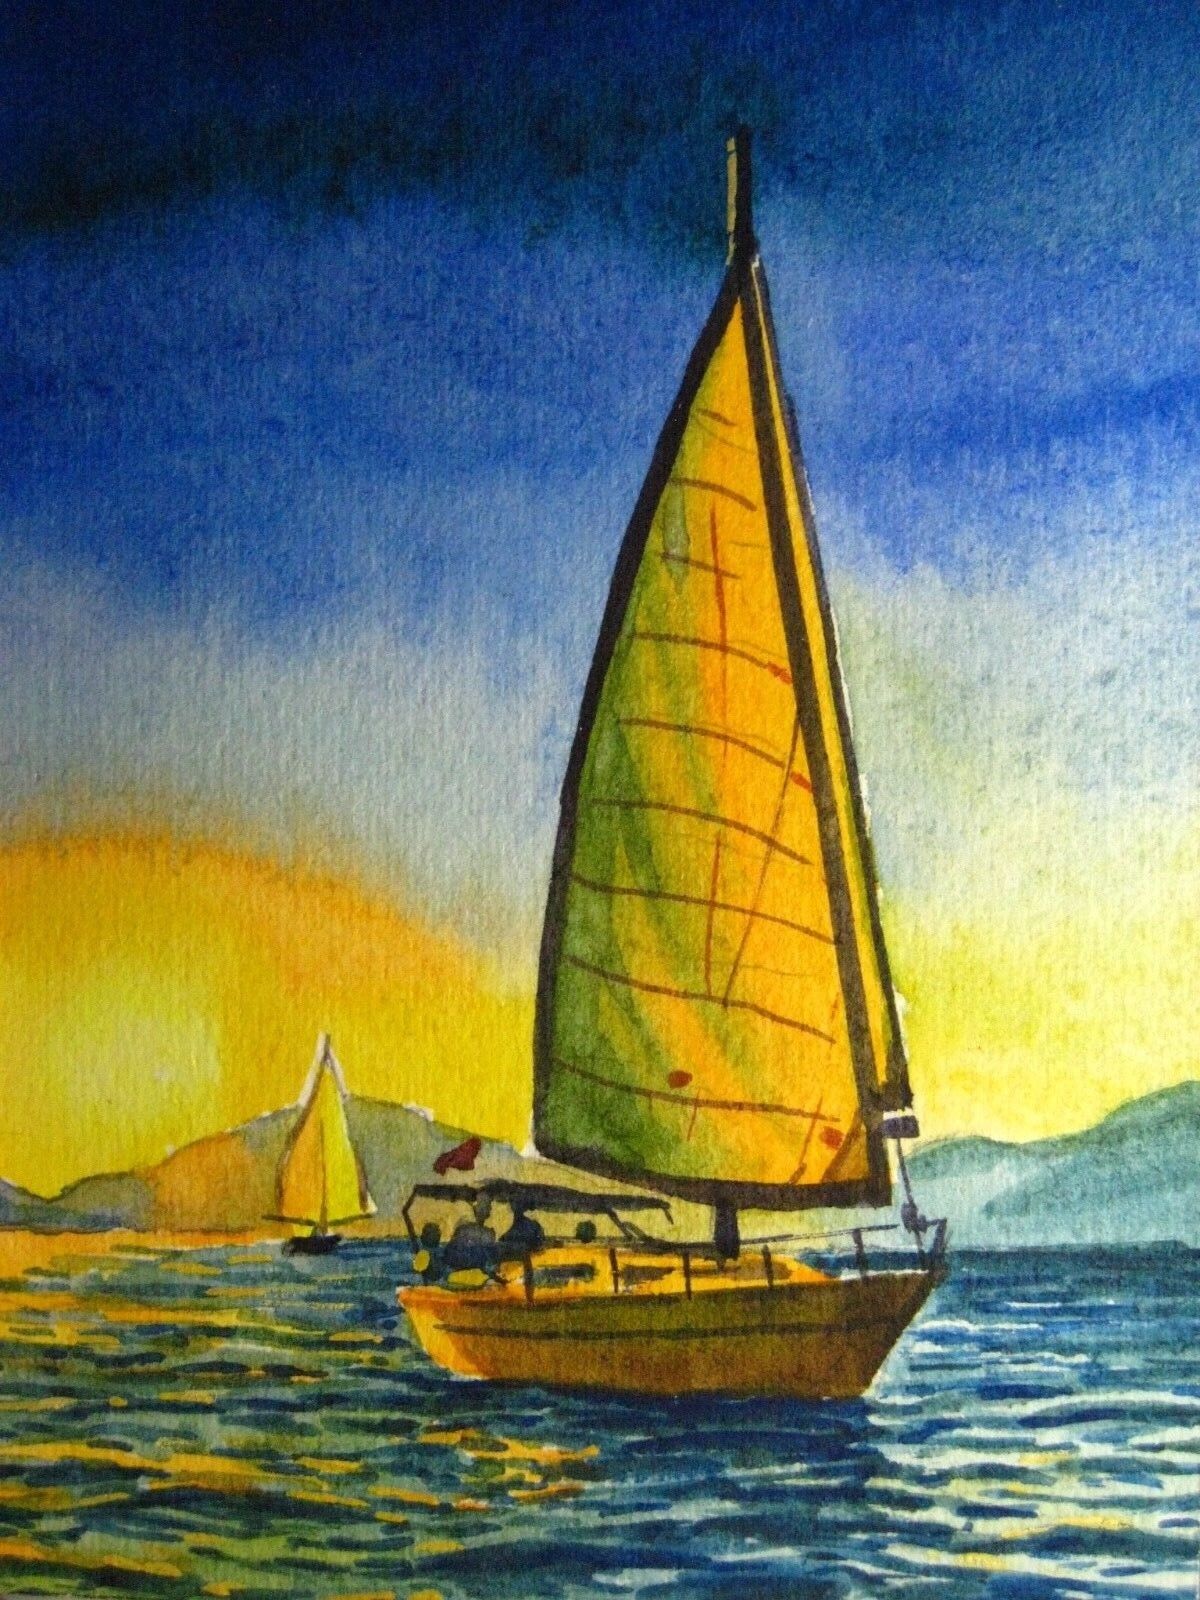 Watercolor Painting Ocean Sailboat Sail Yacht Seascape Nature ACEO Art